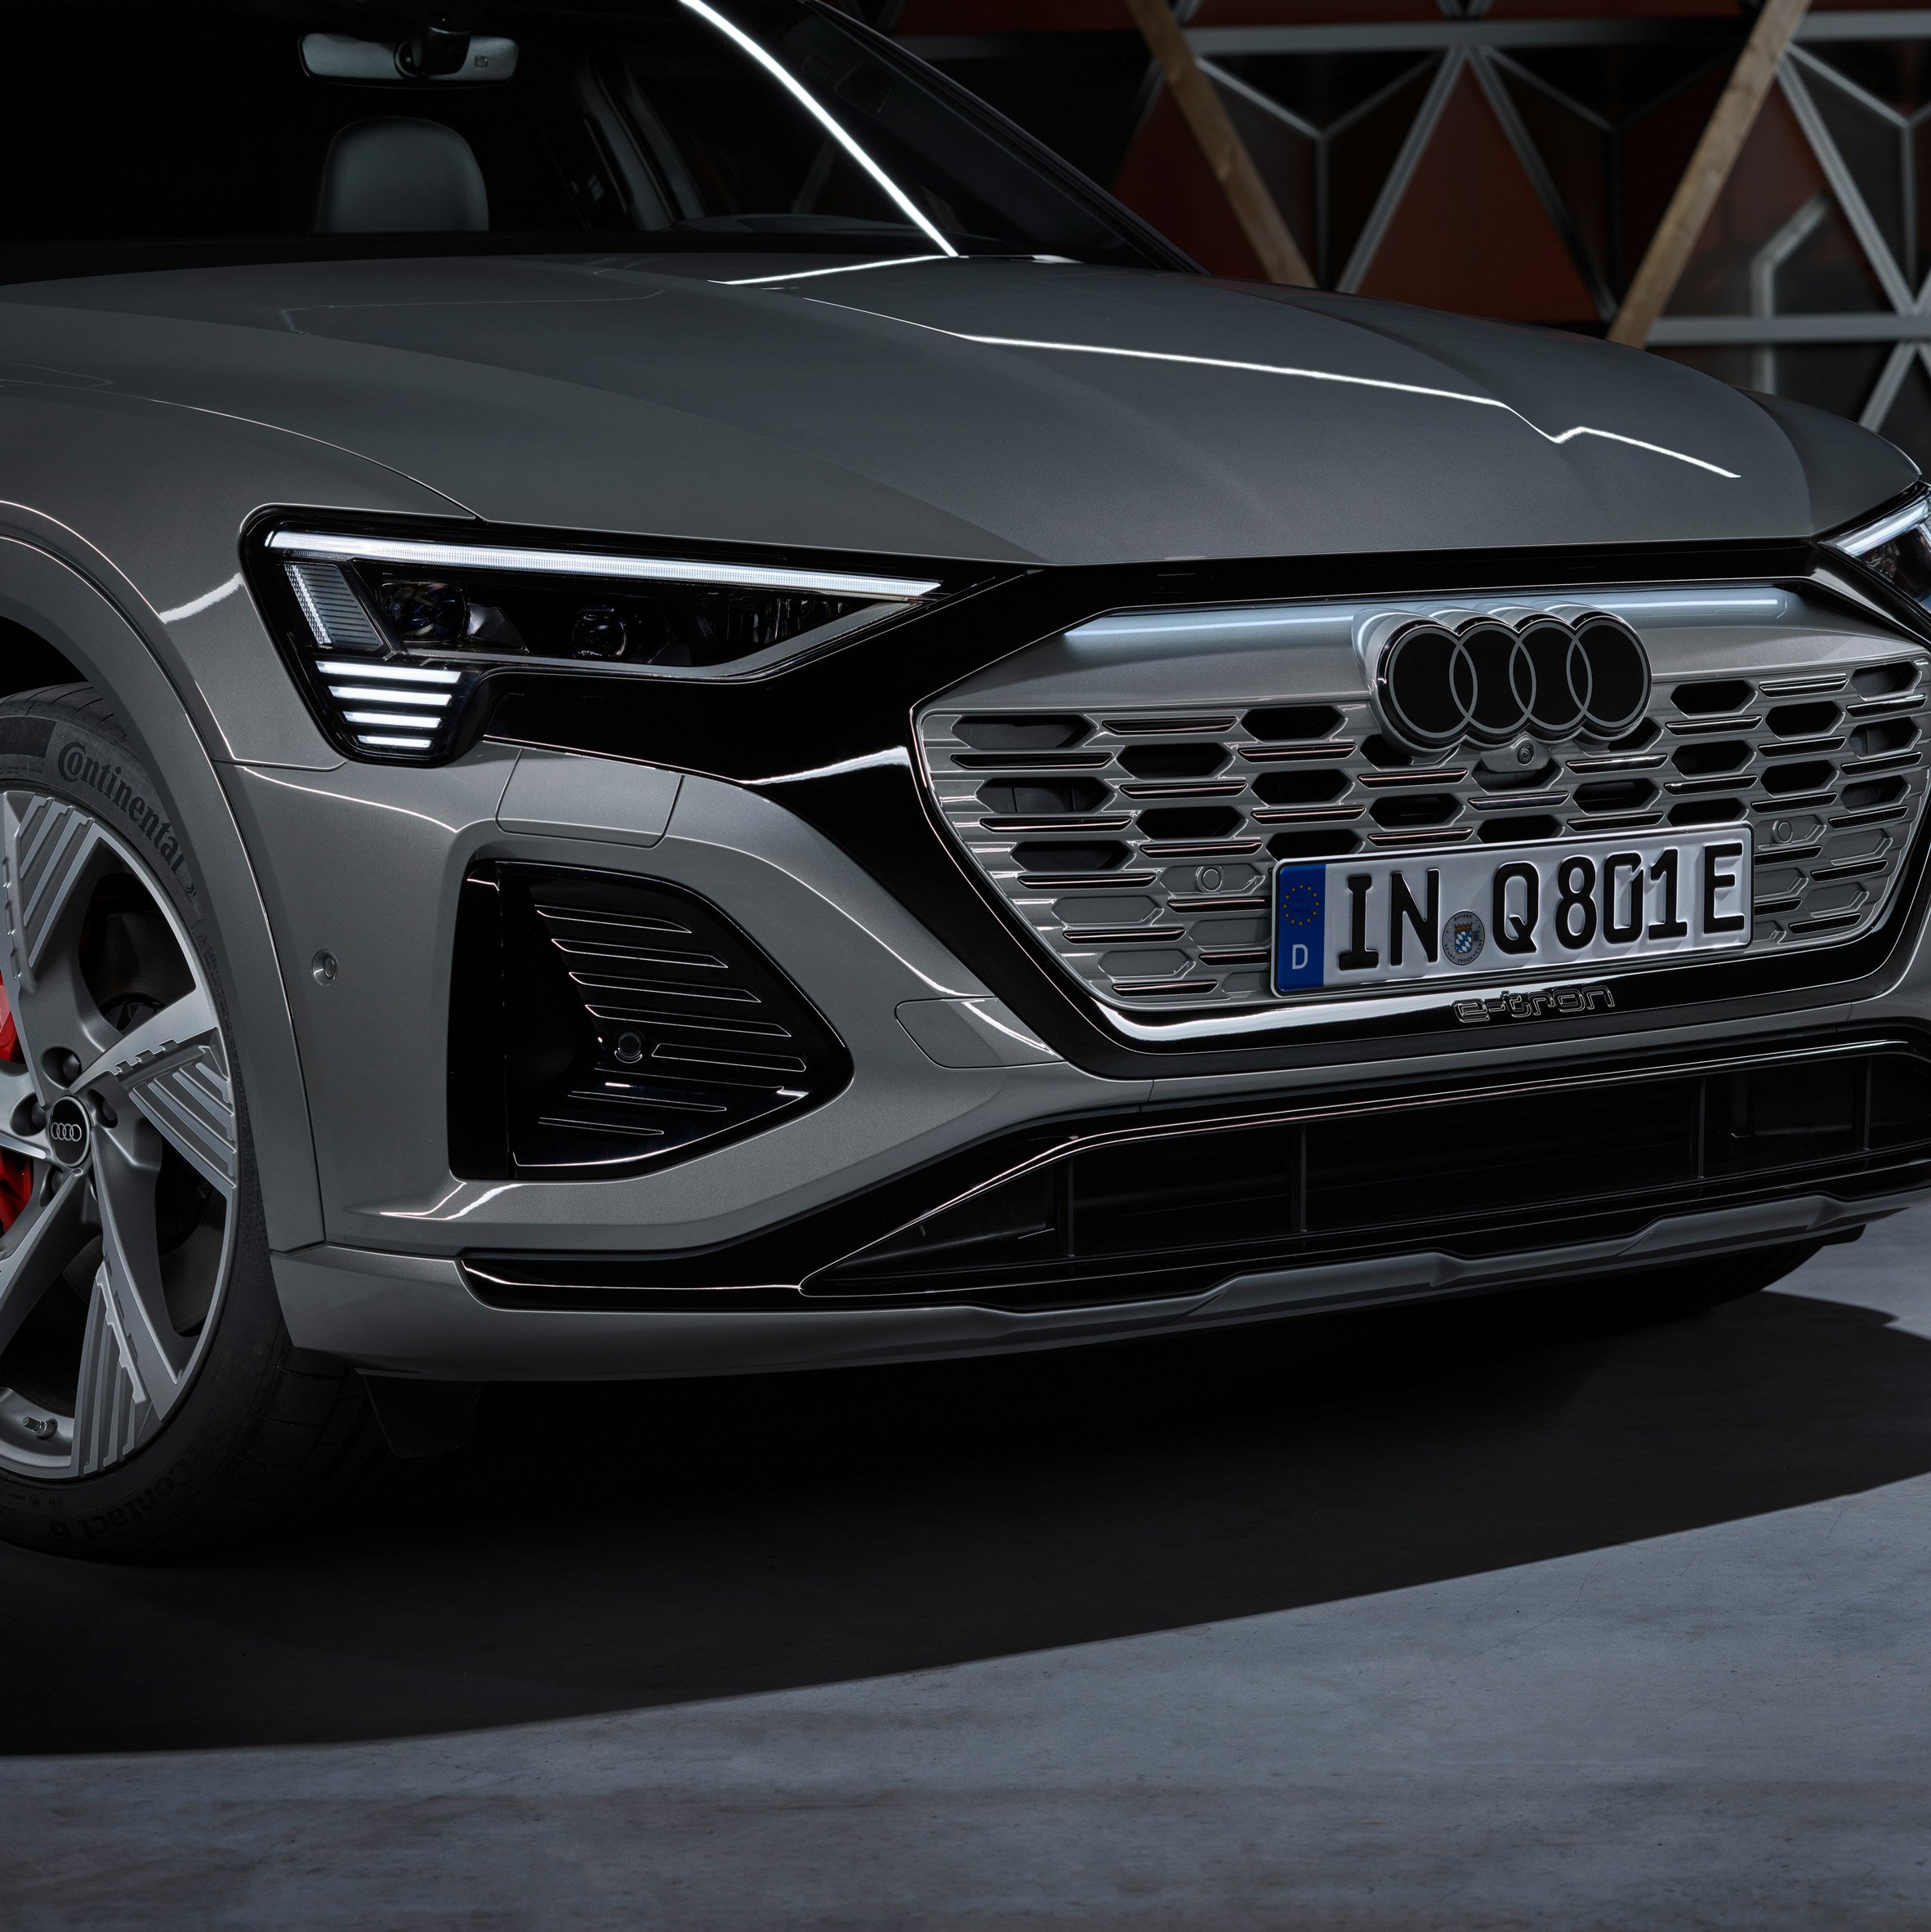 Audi logo: New Corporate Design